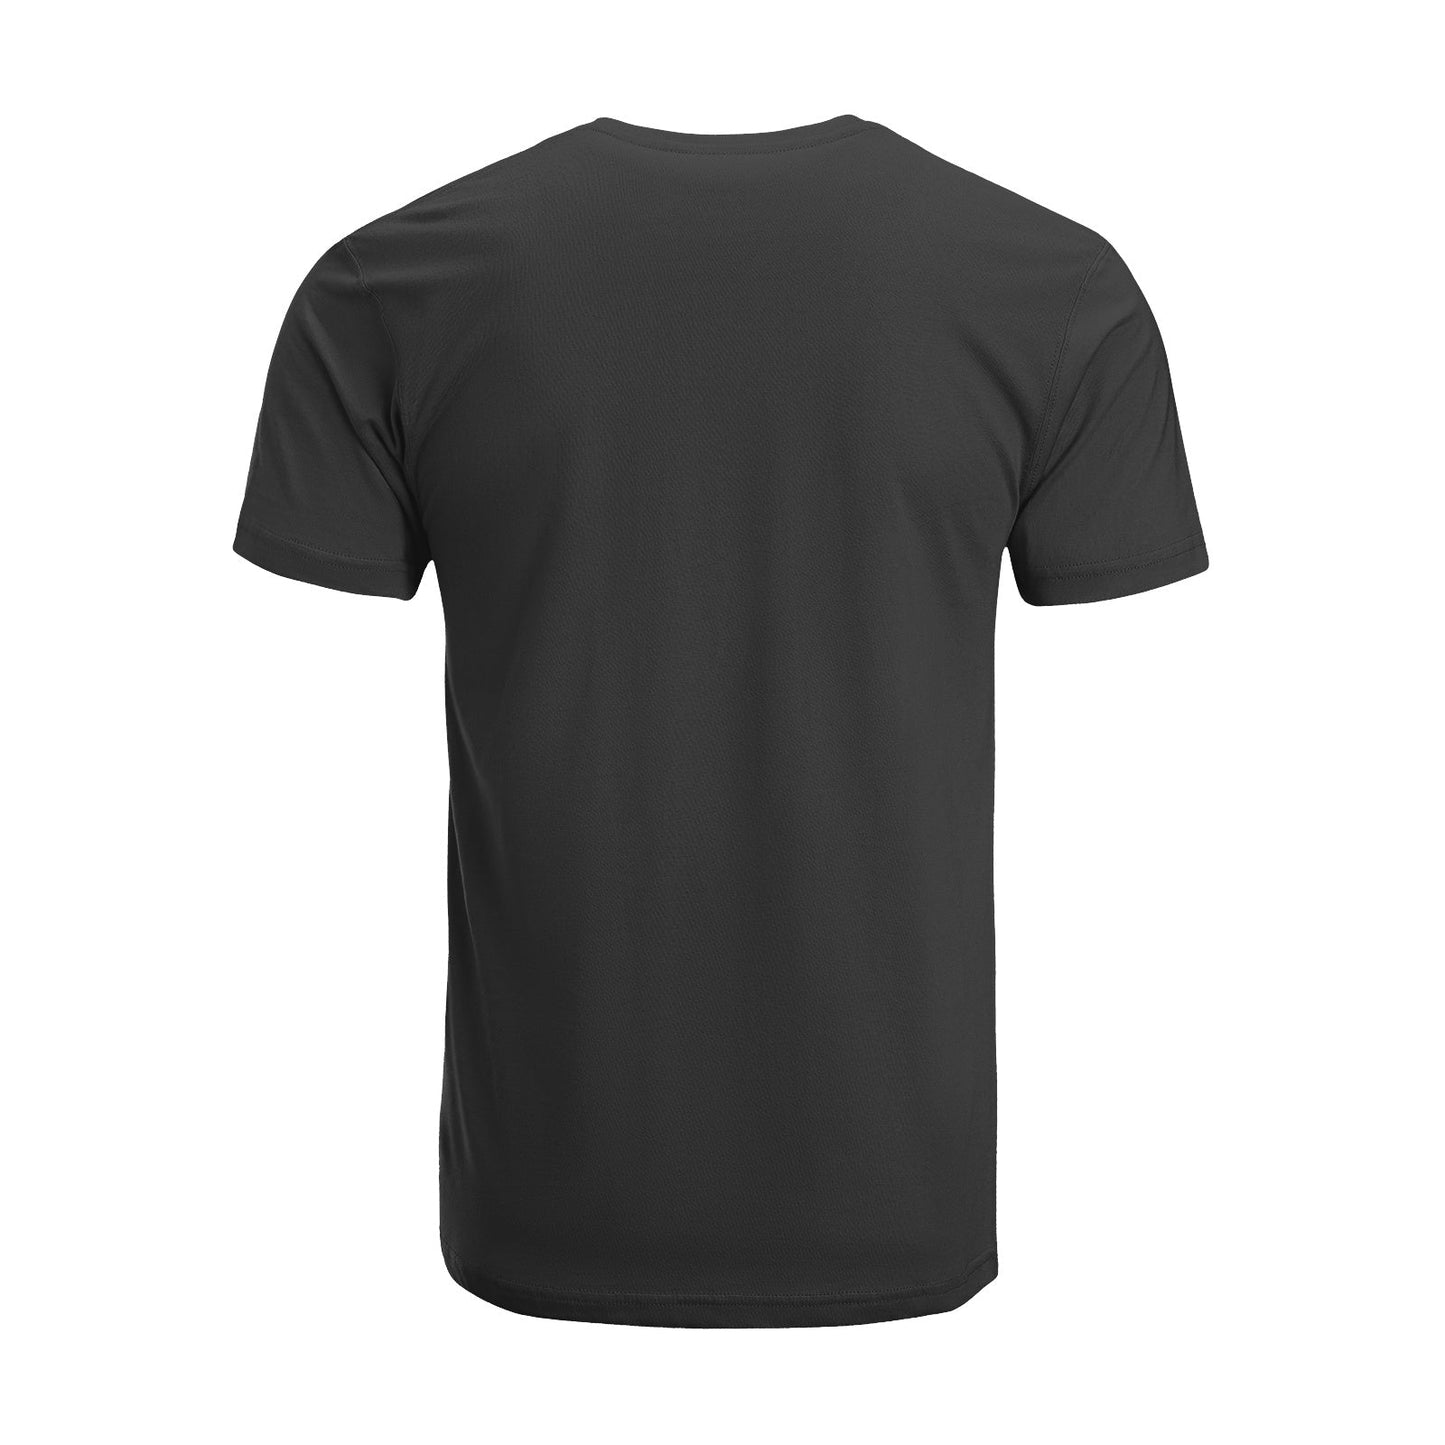 Unisex Short Sleeve Crew Neck Cotton Jersey T-Shirt USA 08